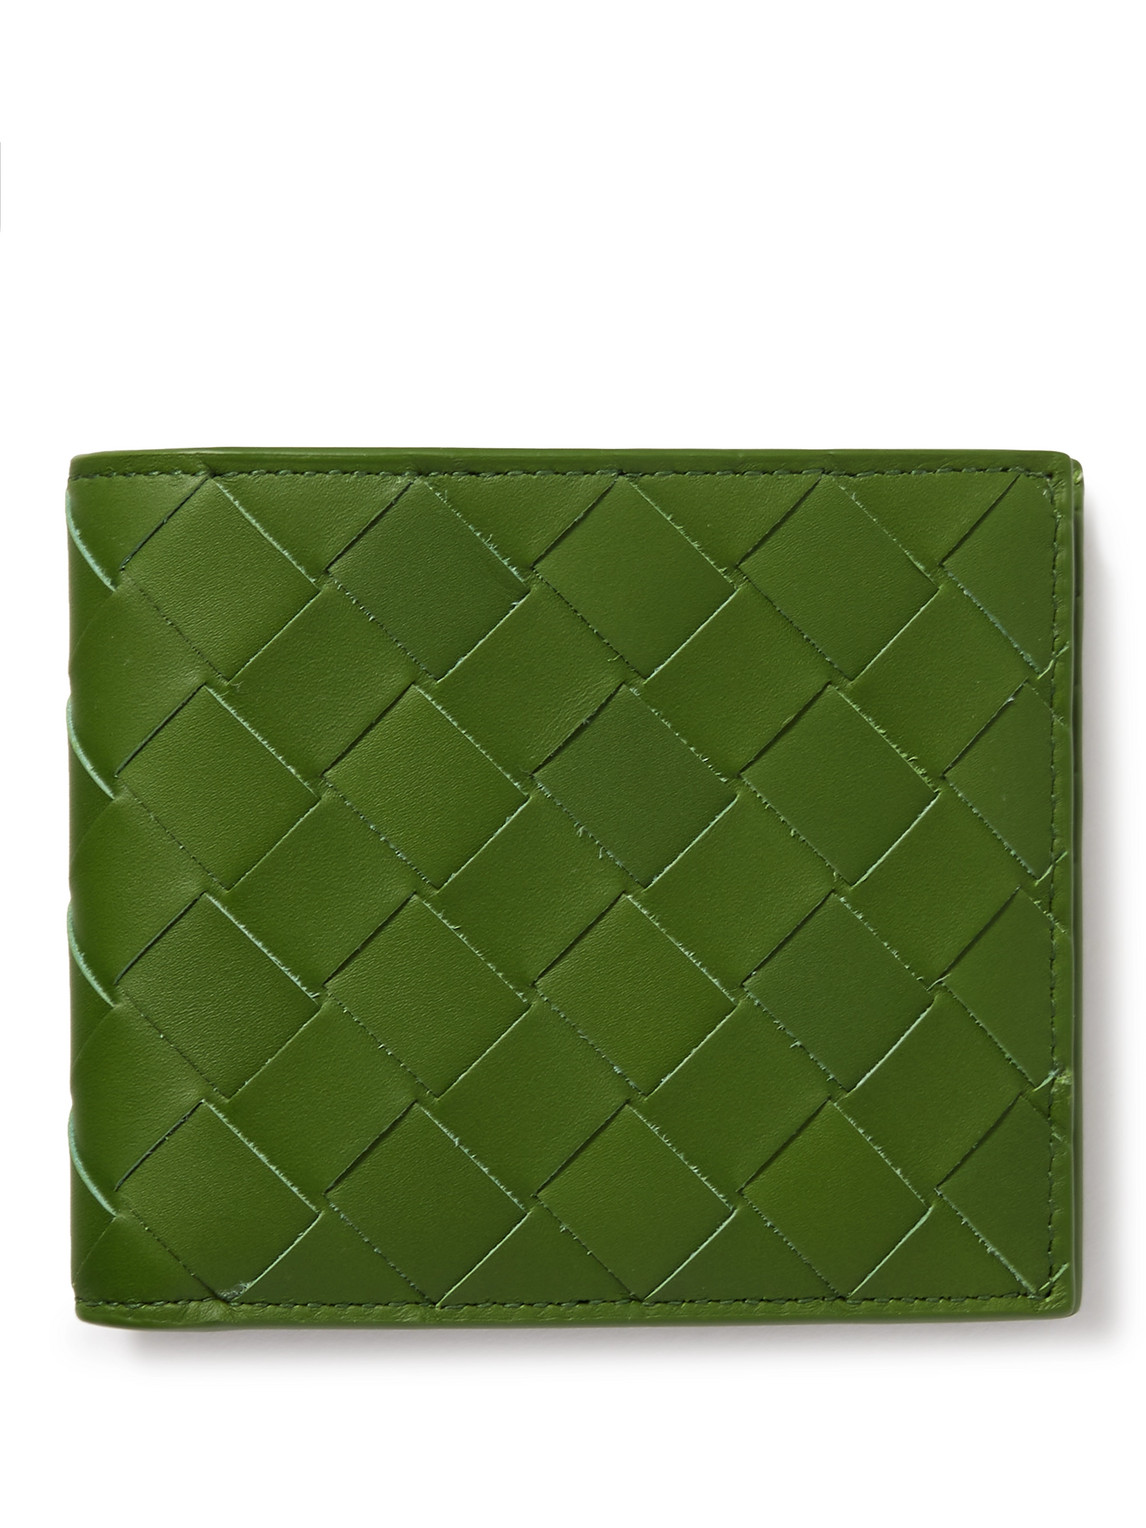 Bottega Veneta - Intrecciato Leather Billfold Wallet - Men - Green